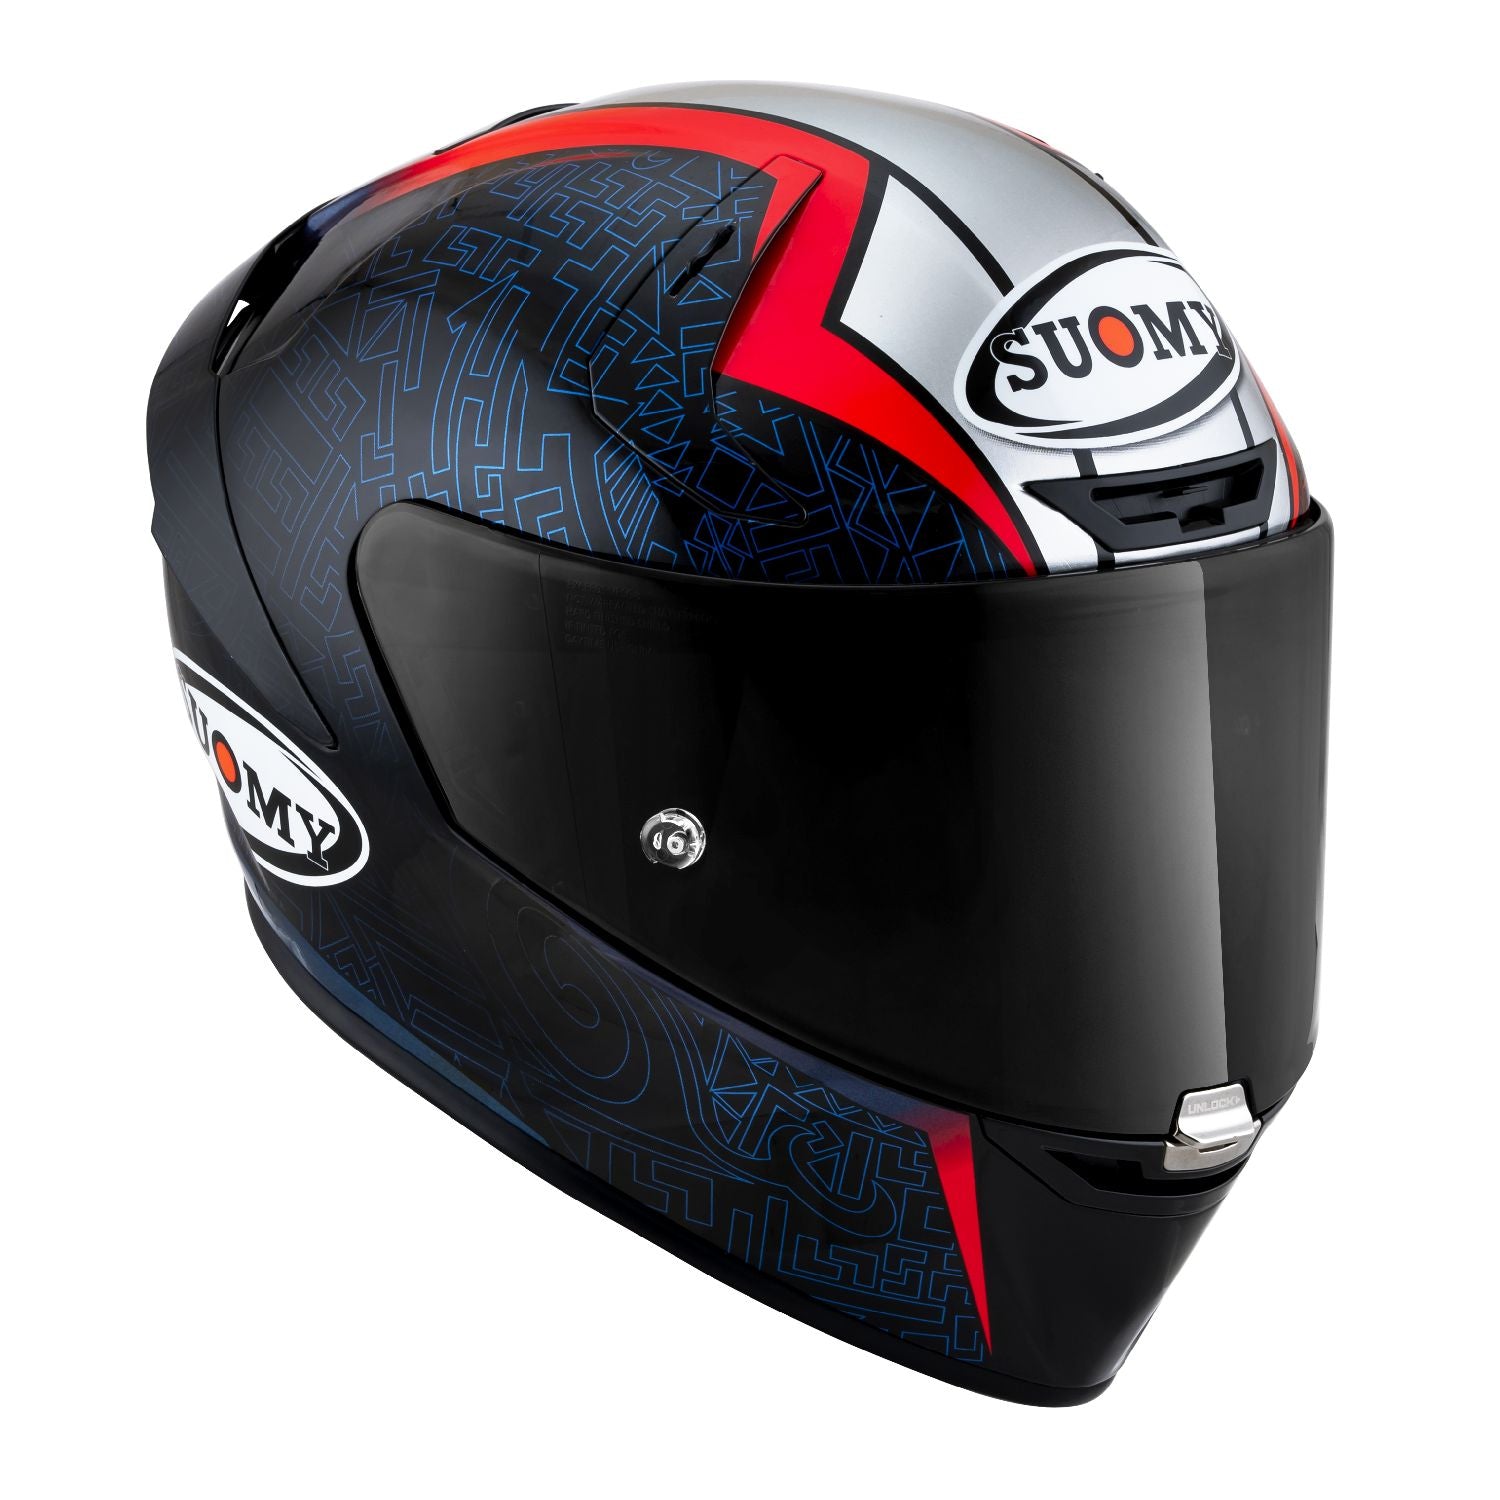 Suomy SR-GP Bagnaia Replica Full Face Motorcycle Helmet (XS - 2XL)